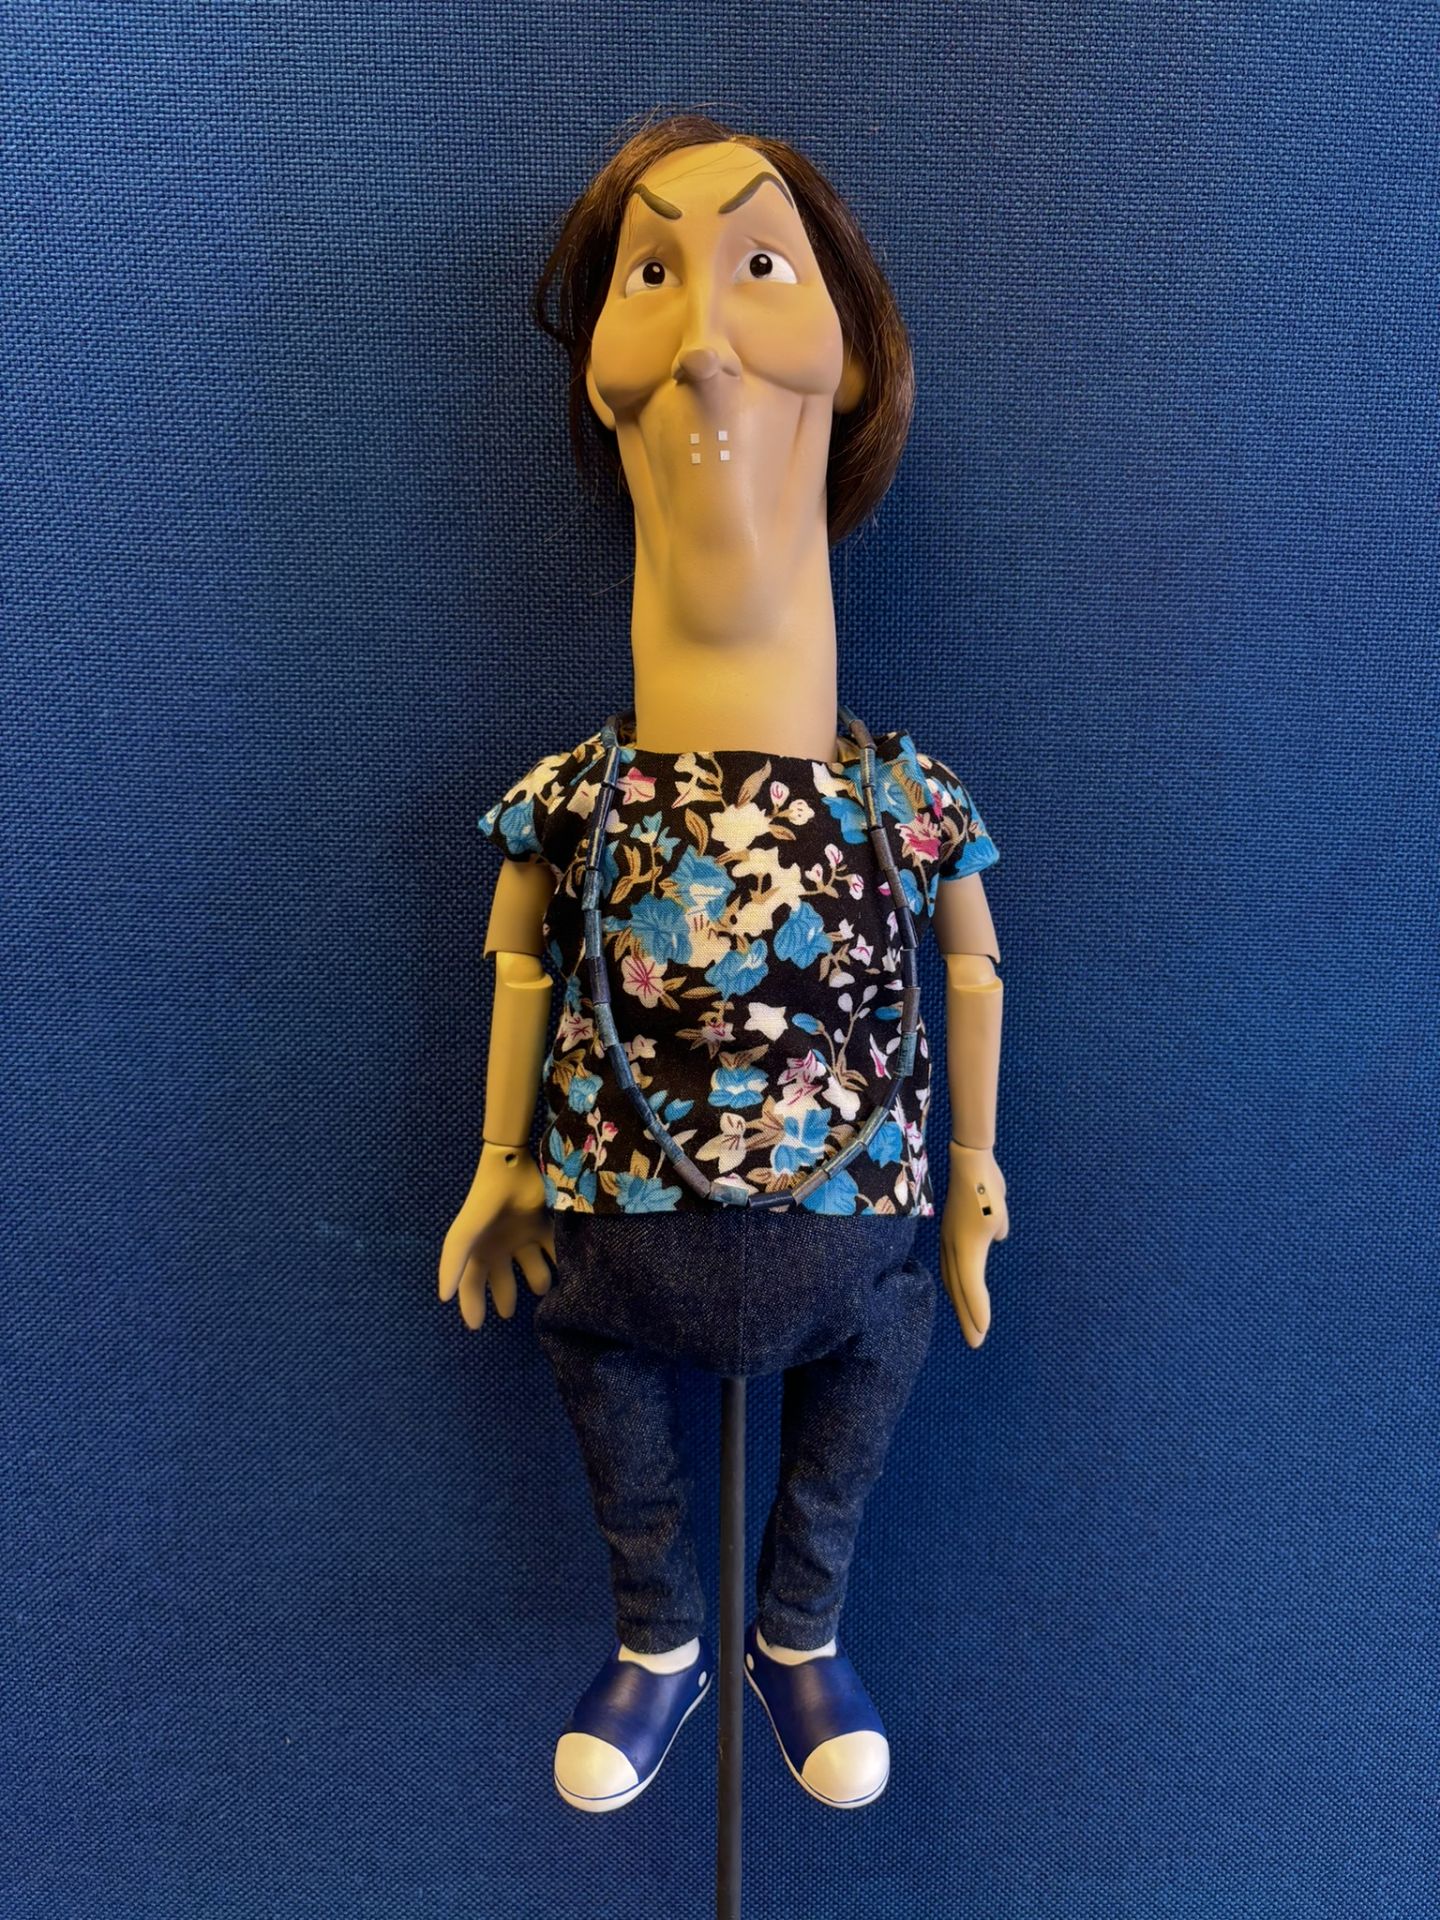 Newzoid puppet - Miranda Hart - Image 2 of 3